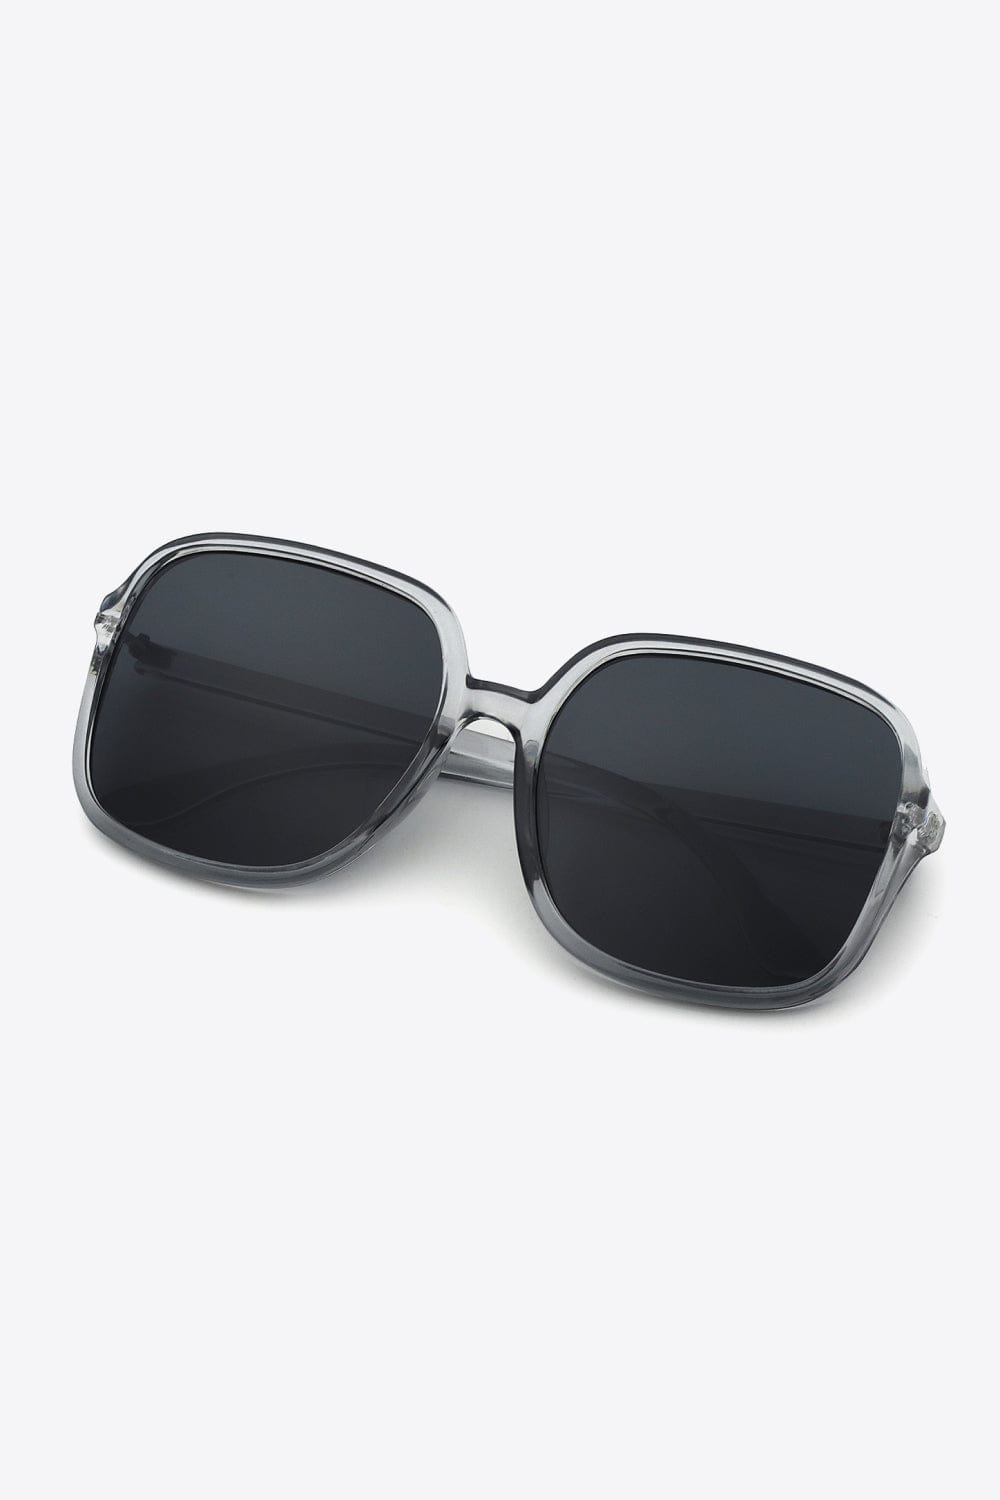 The802Gypsy sunglasses Black / One Size GYPSY-Polycarbonate Square Sunglasses